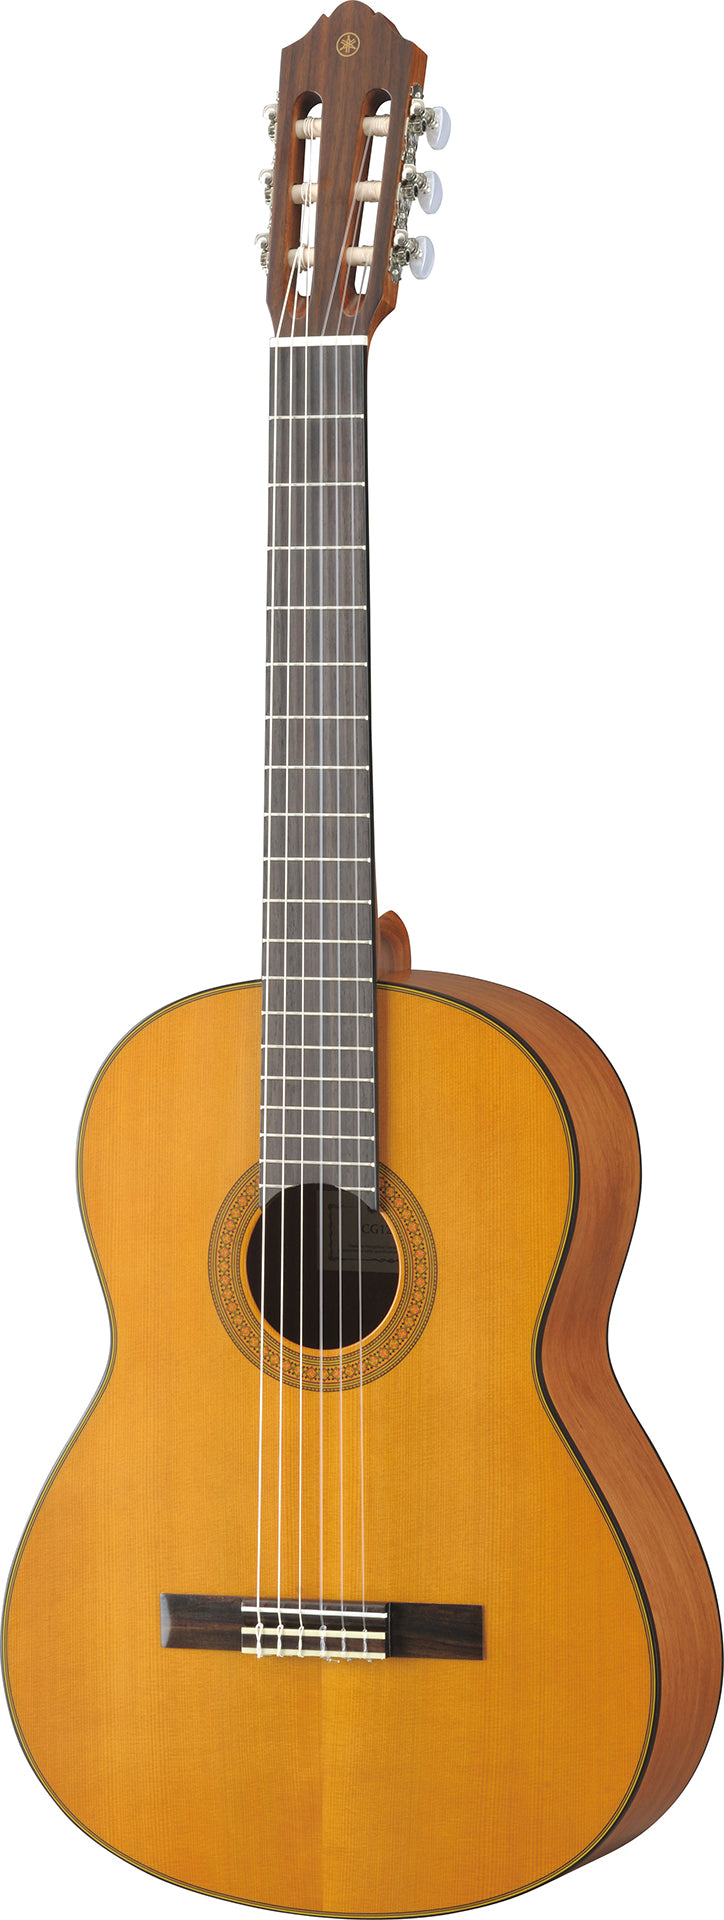 Yamaha CG122MCH Solid Cedar Top Natural Classical Acoustic Guitar